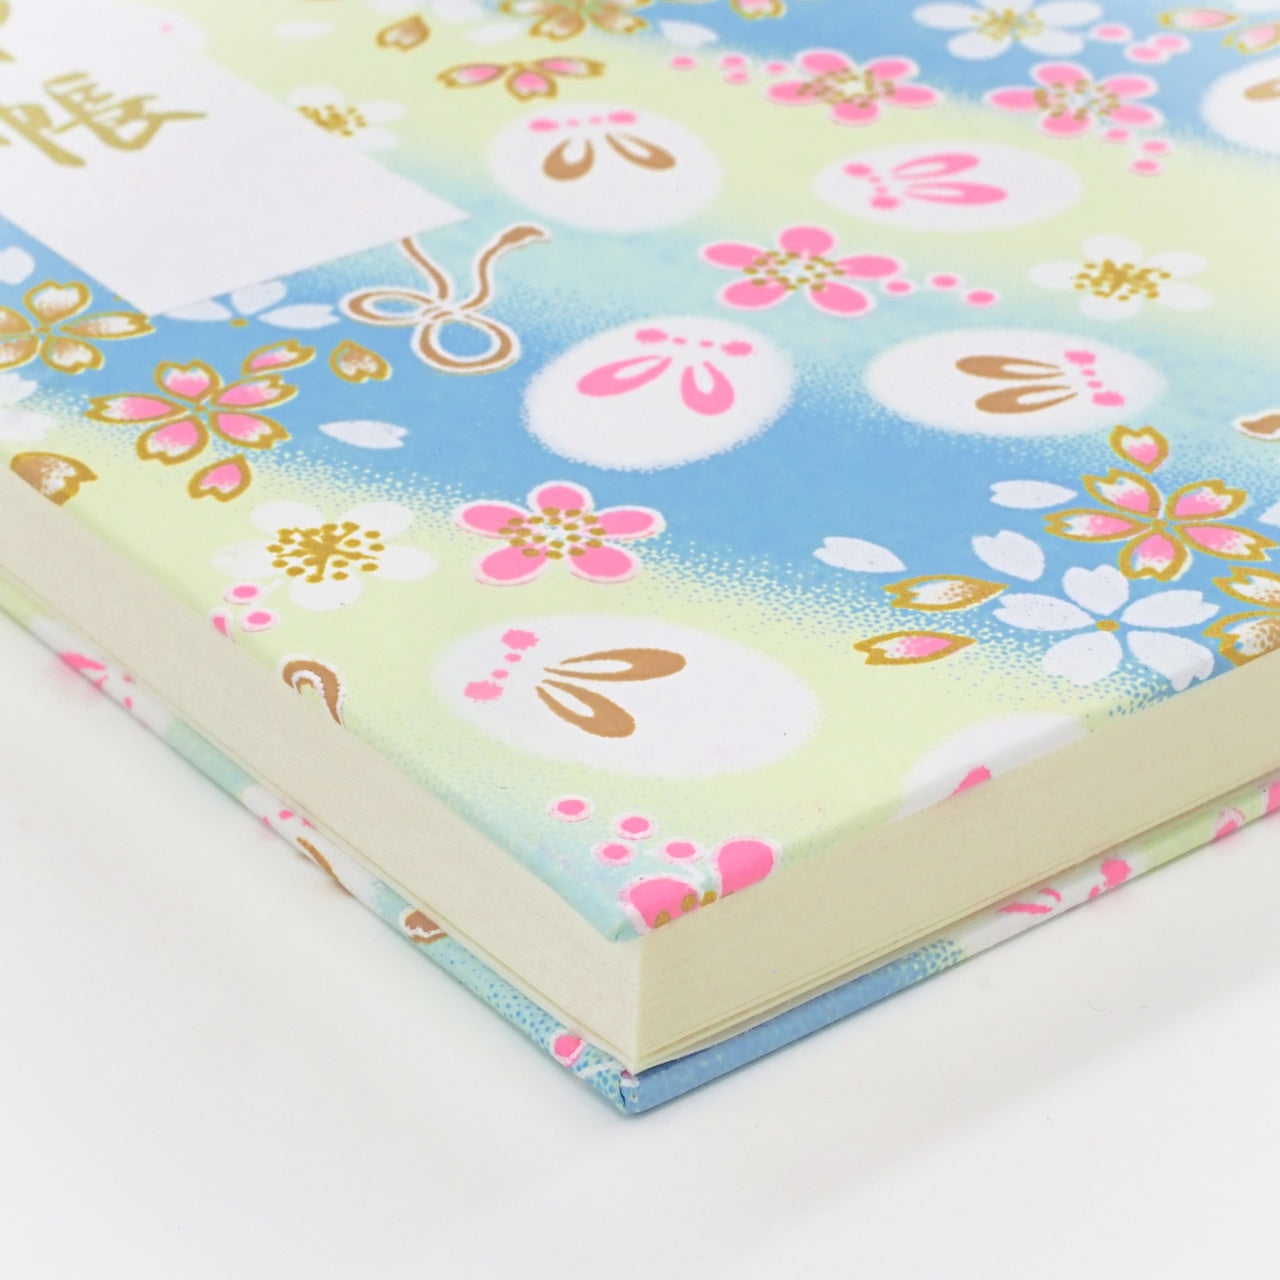 Goshuin book “Kiyora” Snow Rabbit/Ramune Yukito